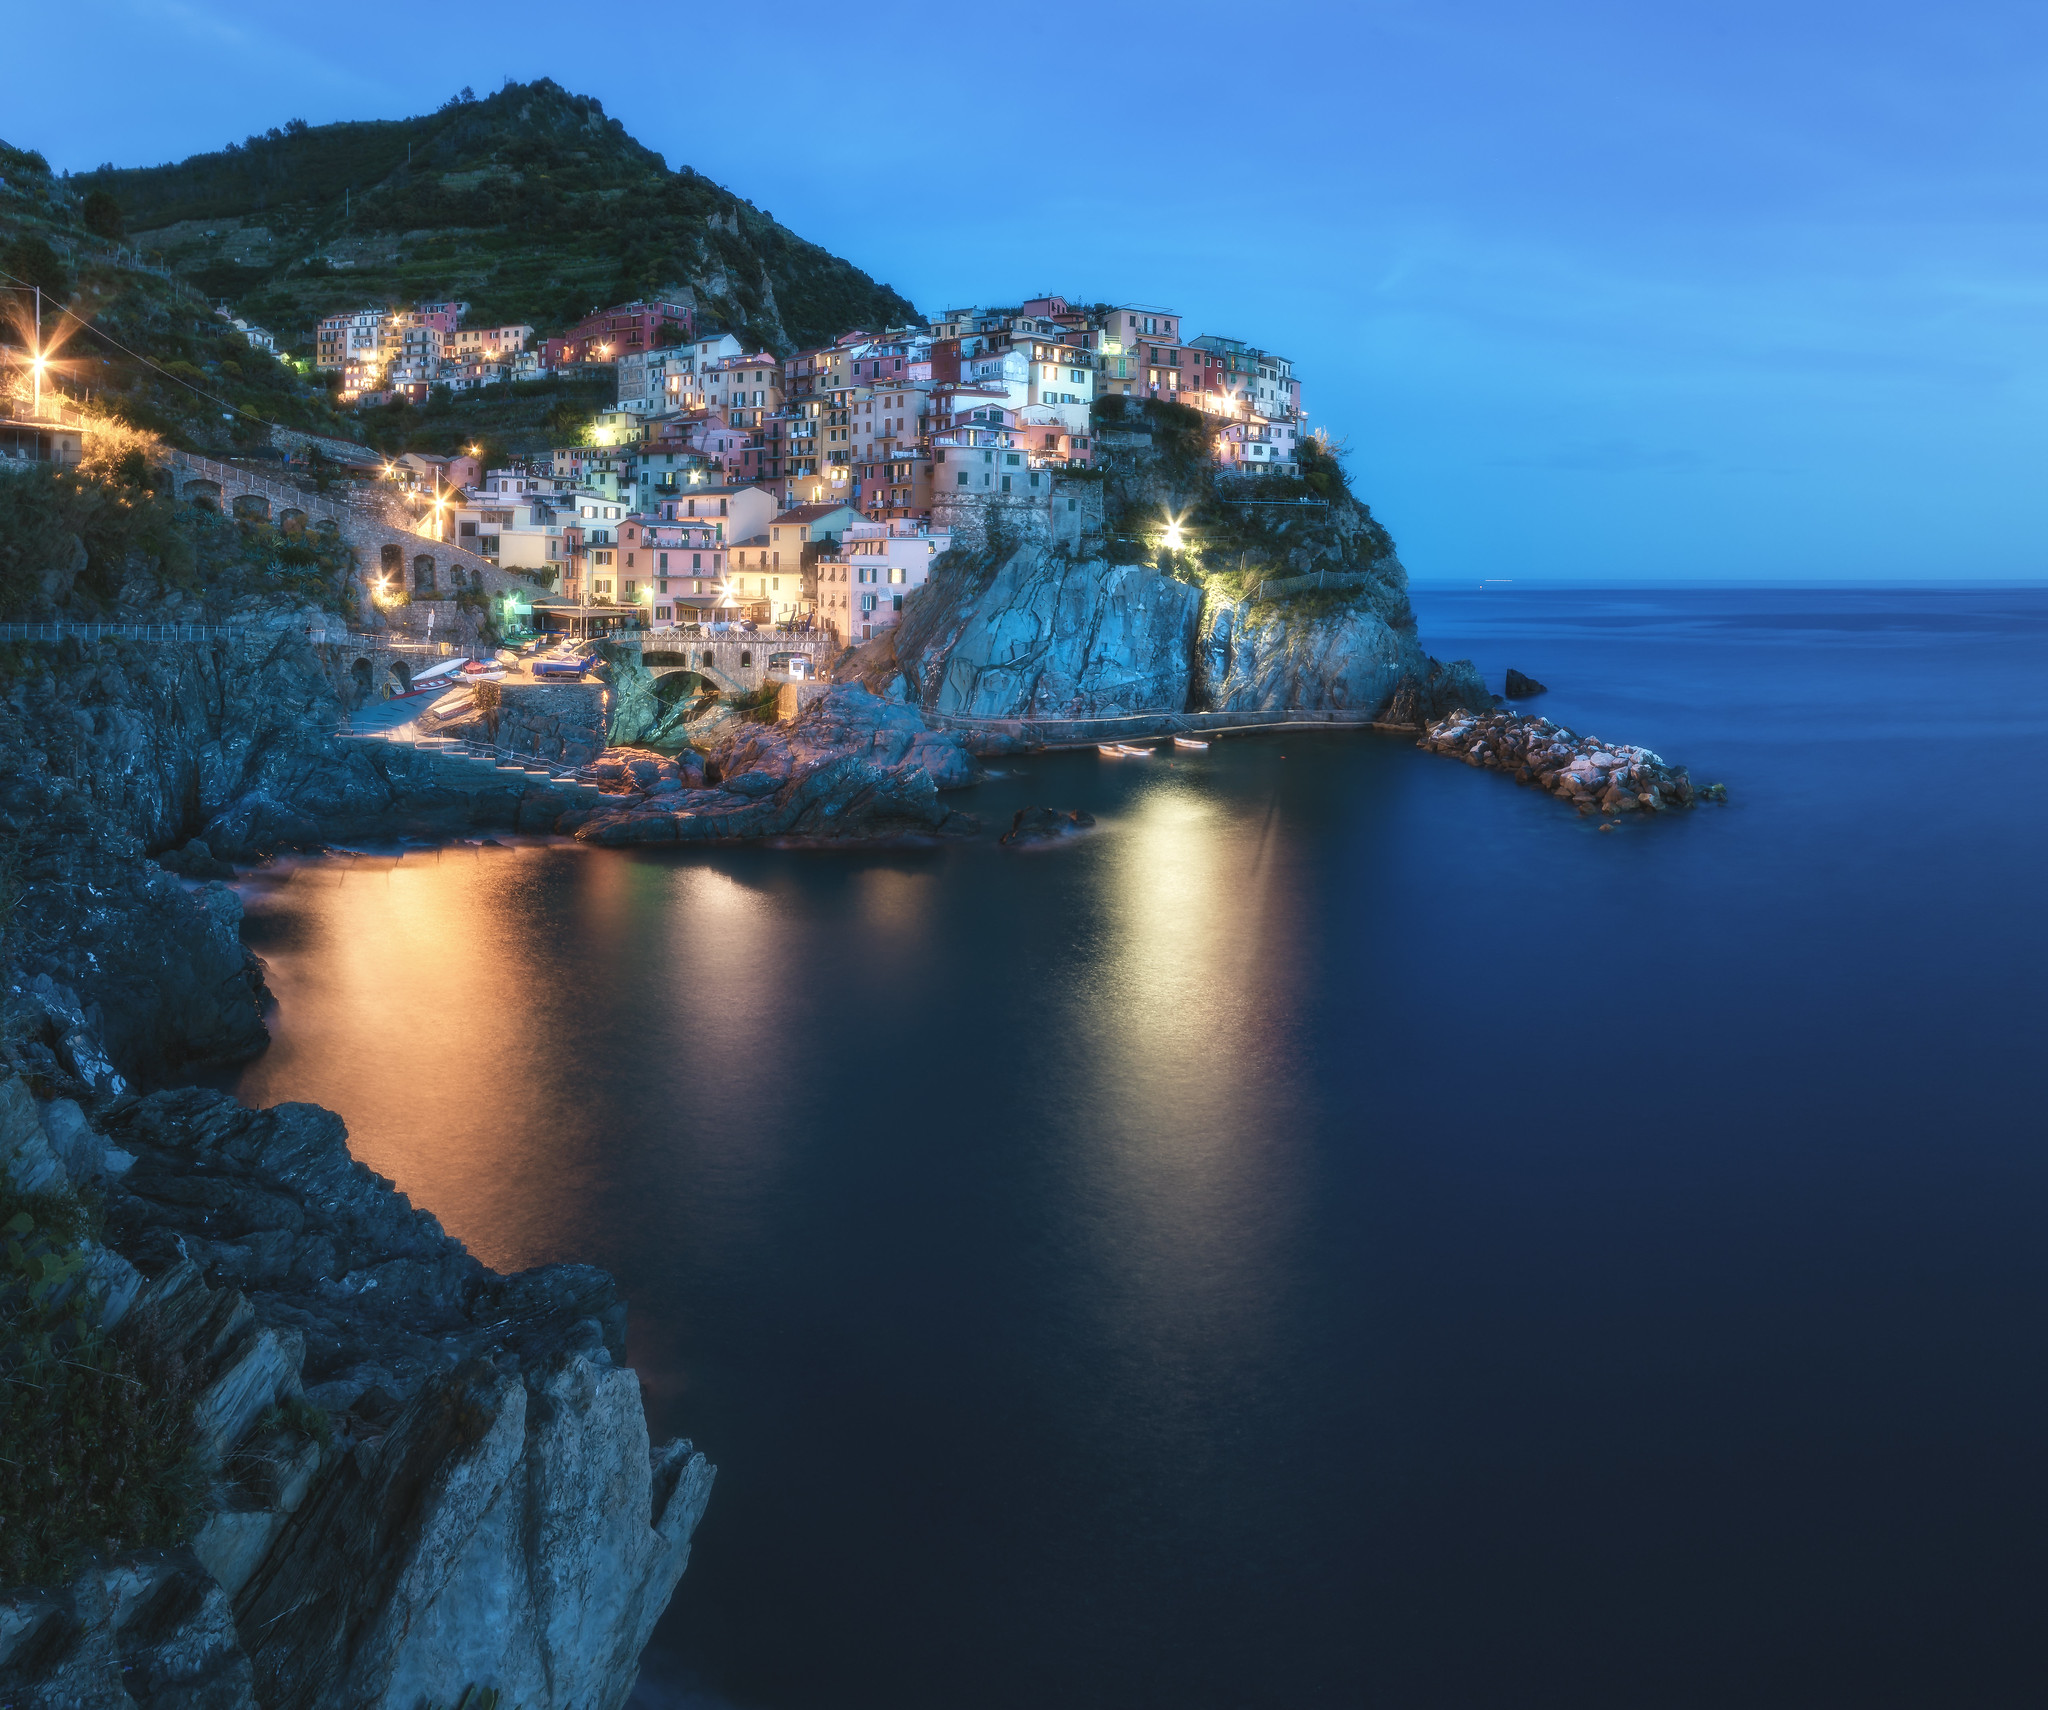 Wallpapers night illumination Cinque Terre on the desktop